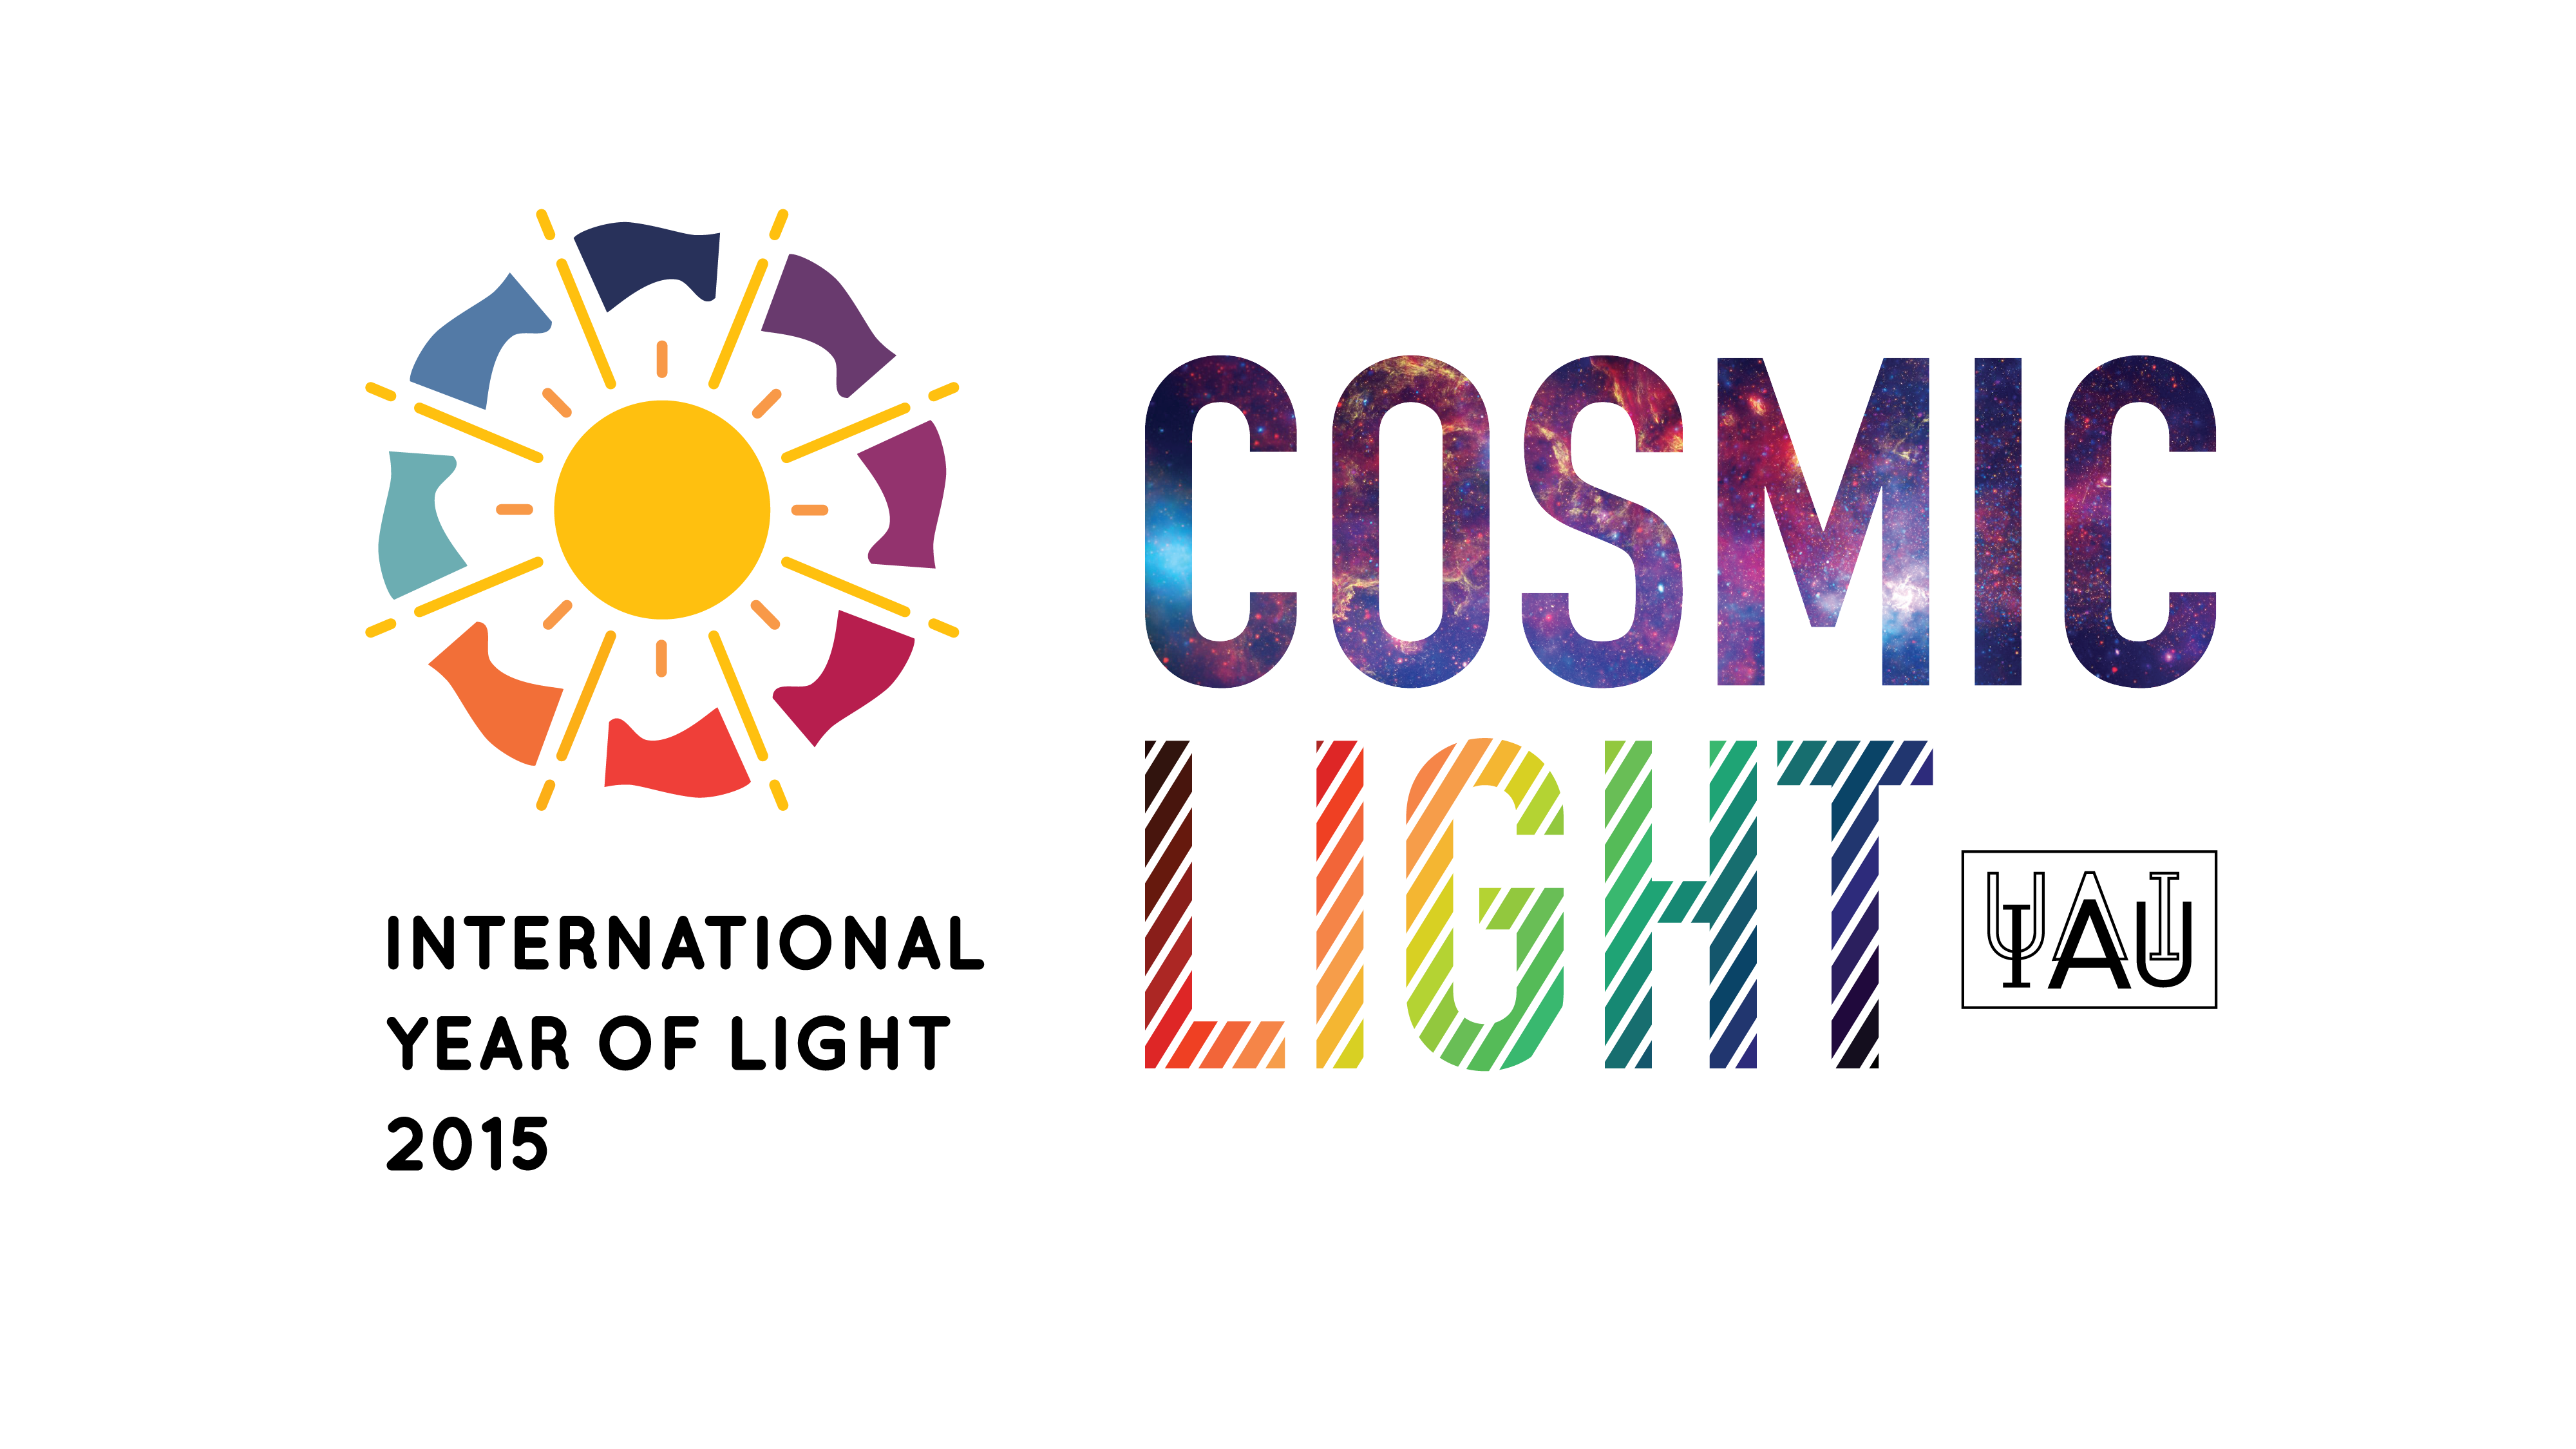 Cosmic Light